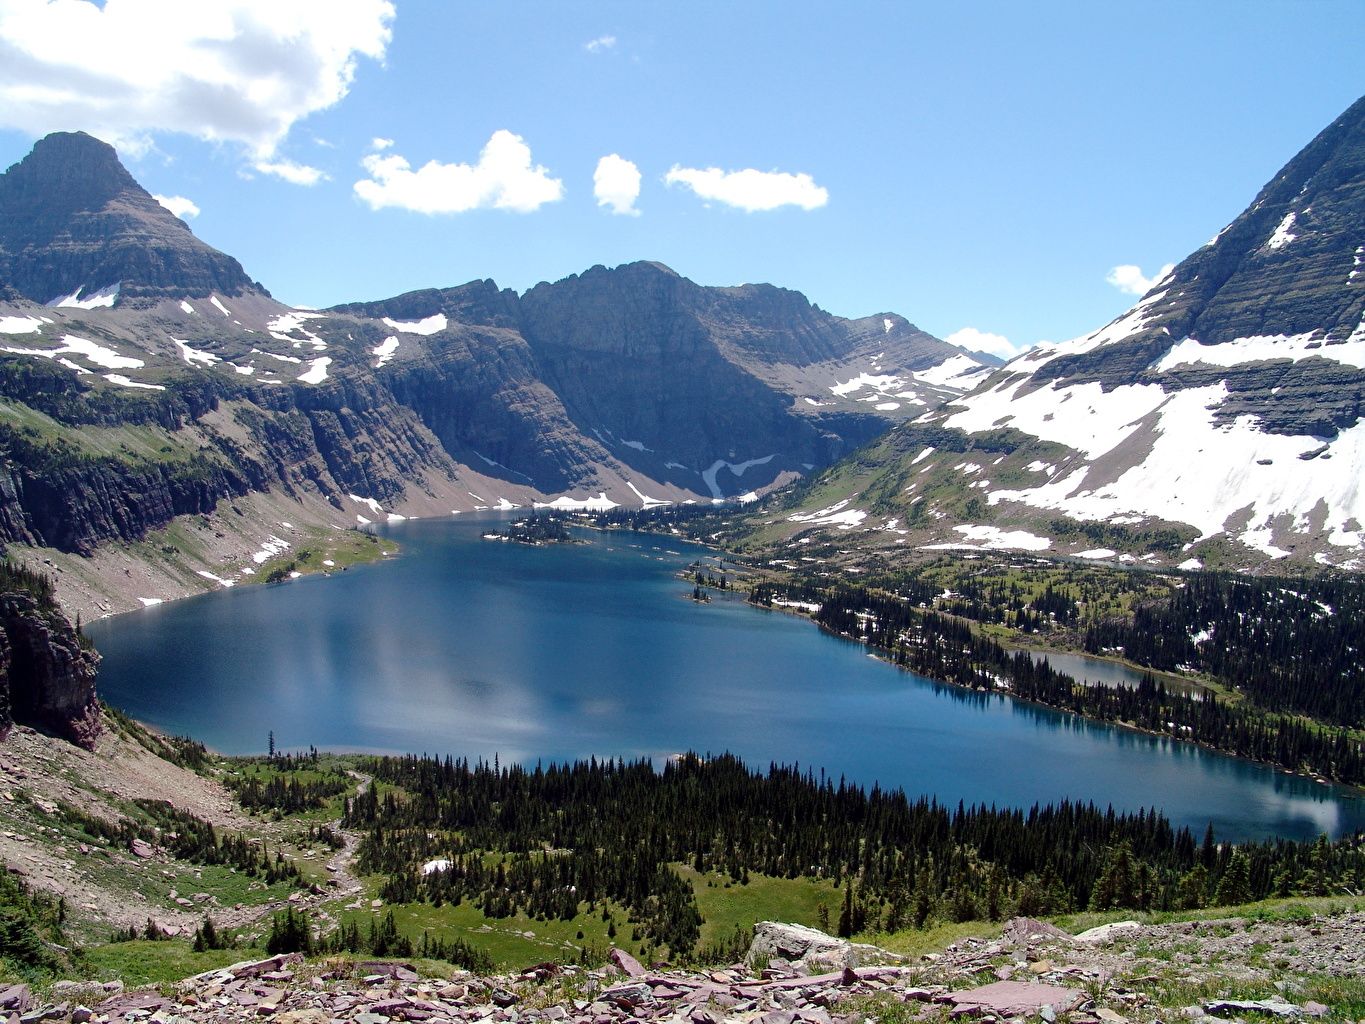 Picture Glacier National Park [USA, Montana] Hidden Lake Nature